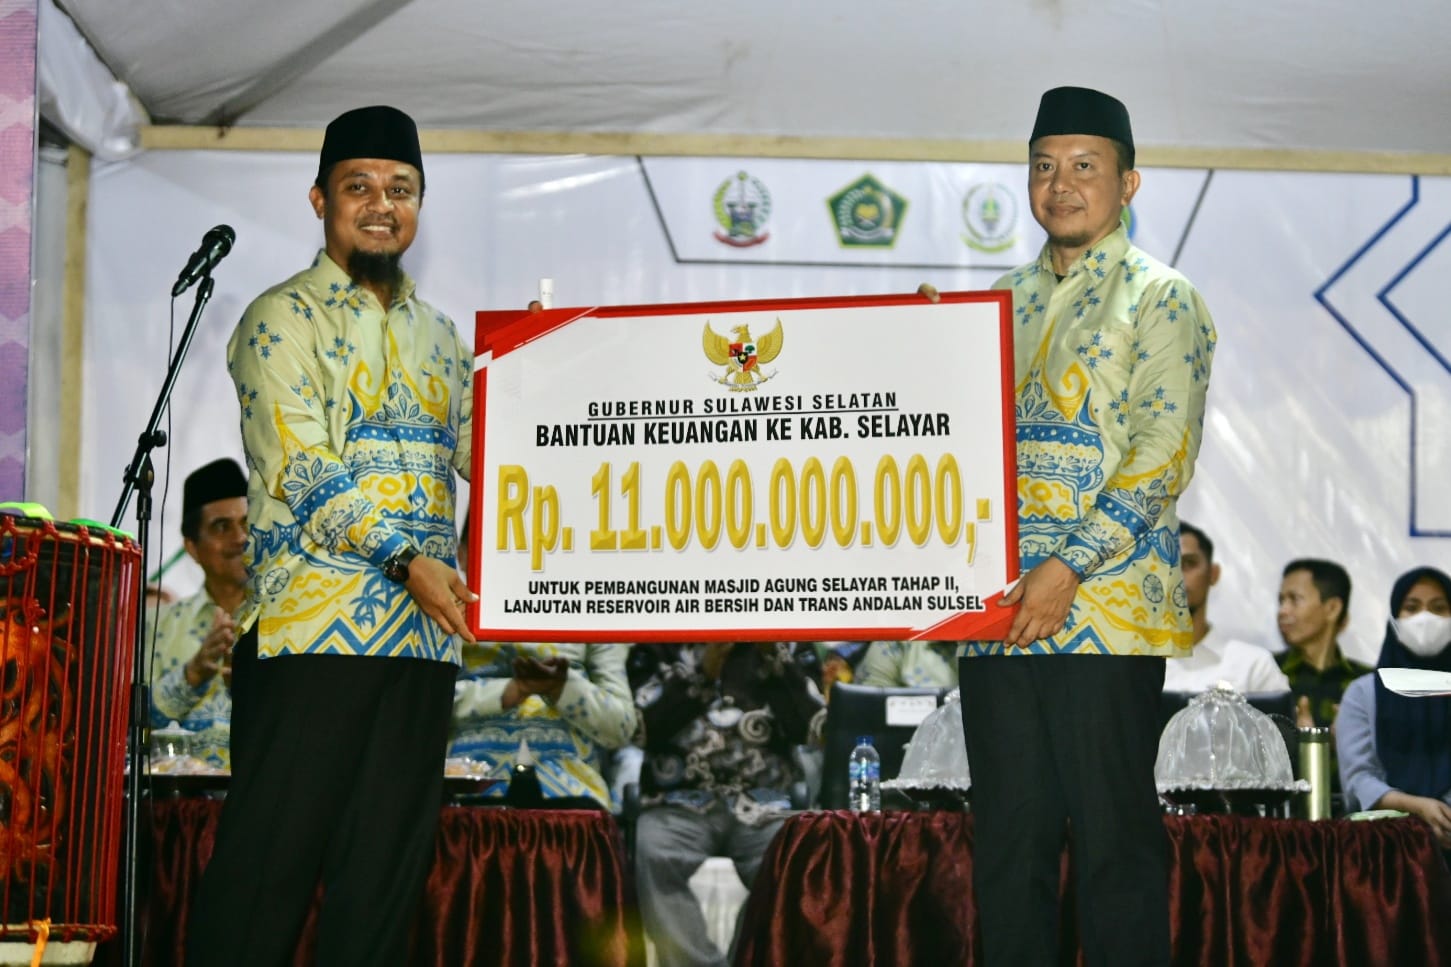 Pemprov Sulsel Sumbang Rp 10 Miliar untuk Pembangunan Masjid Agung Selayar